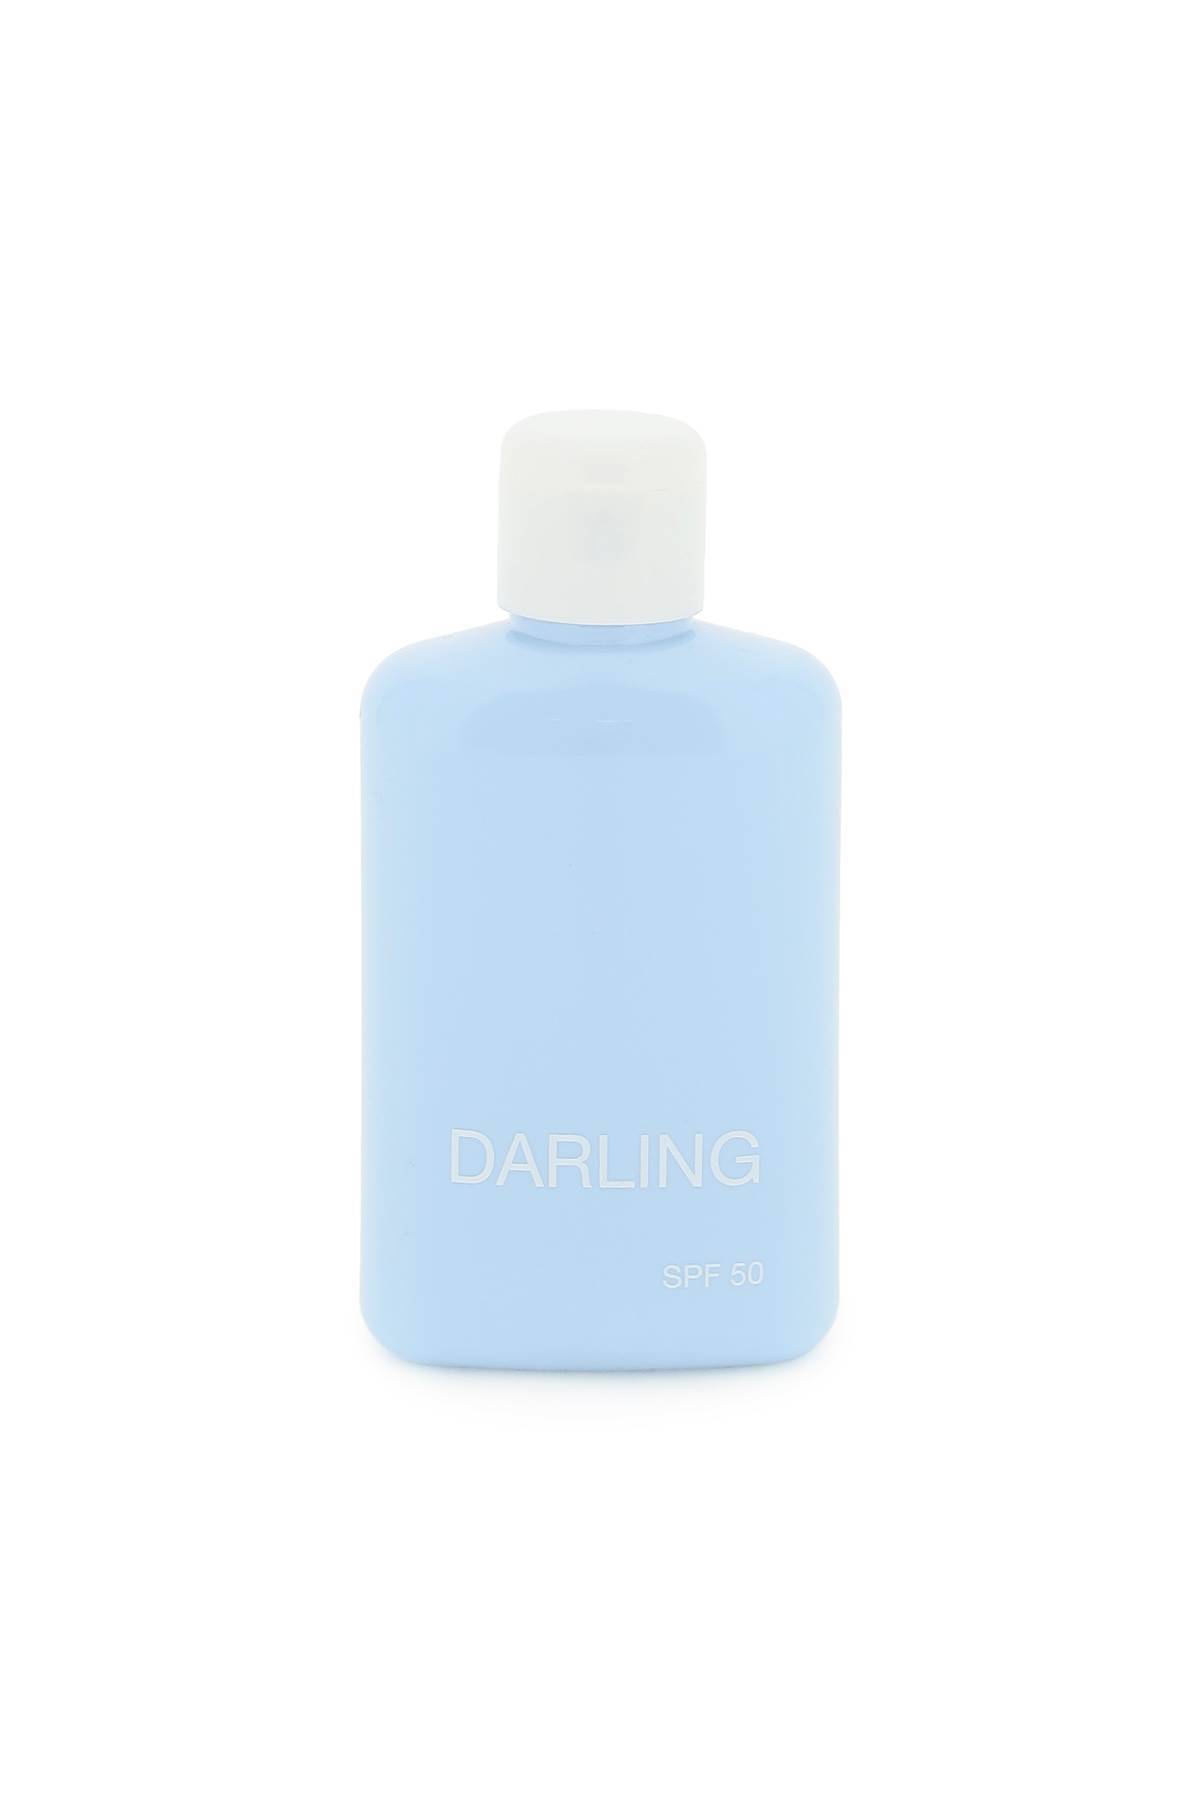 DARLING DARLING high protection spf 50 sun cream - 150 ml